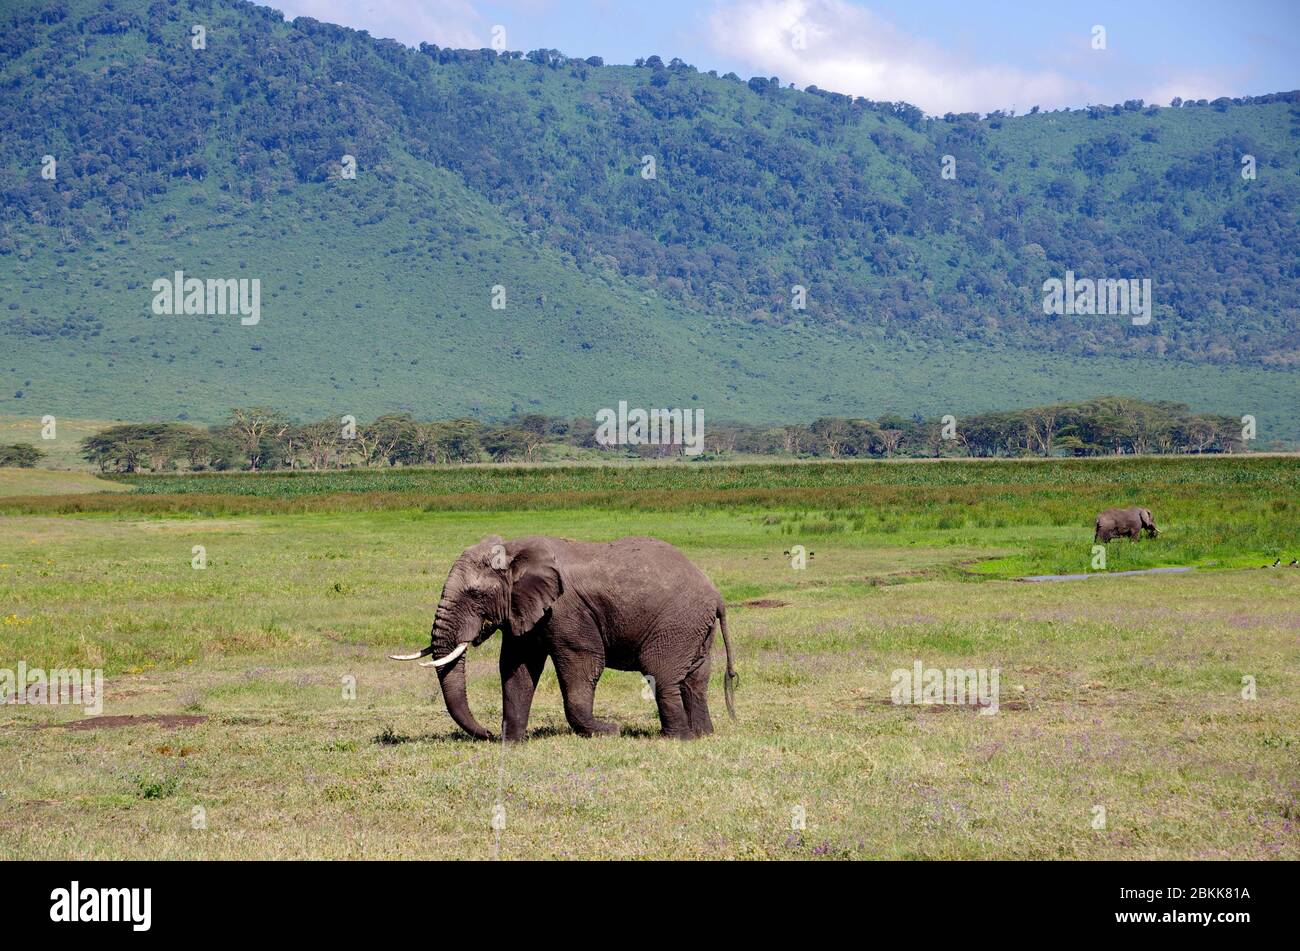 Elephant in the Ngorongoro crater in Tanzania Stock Photo